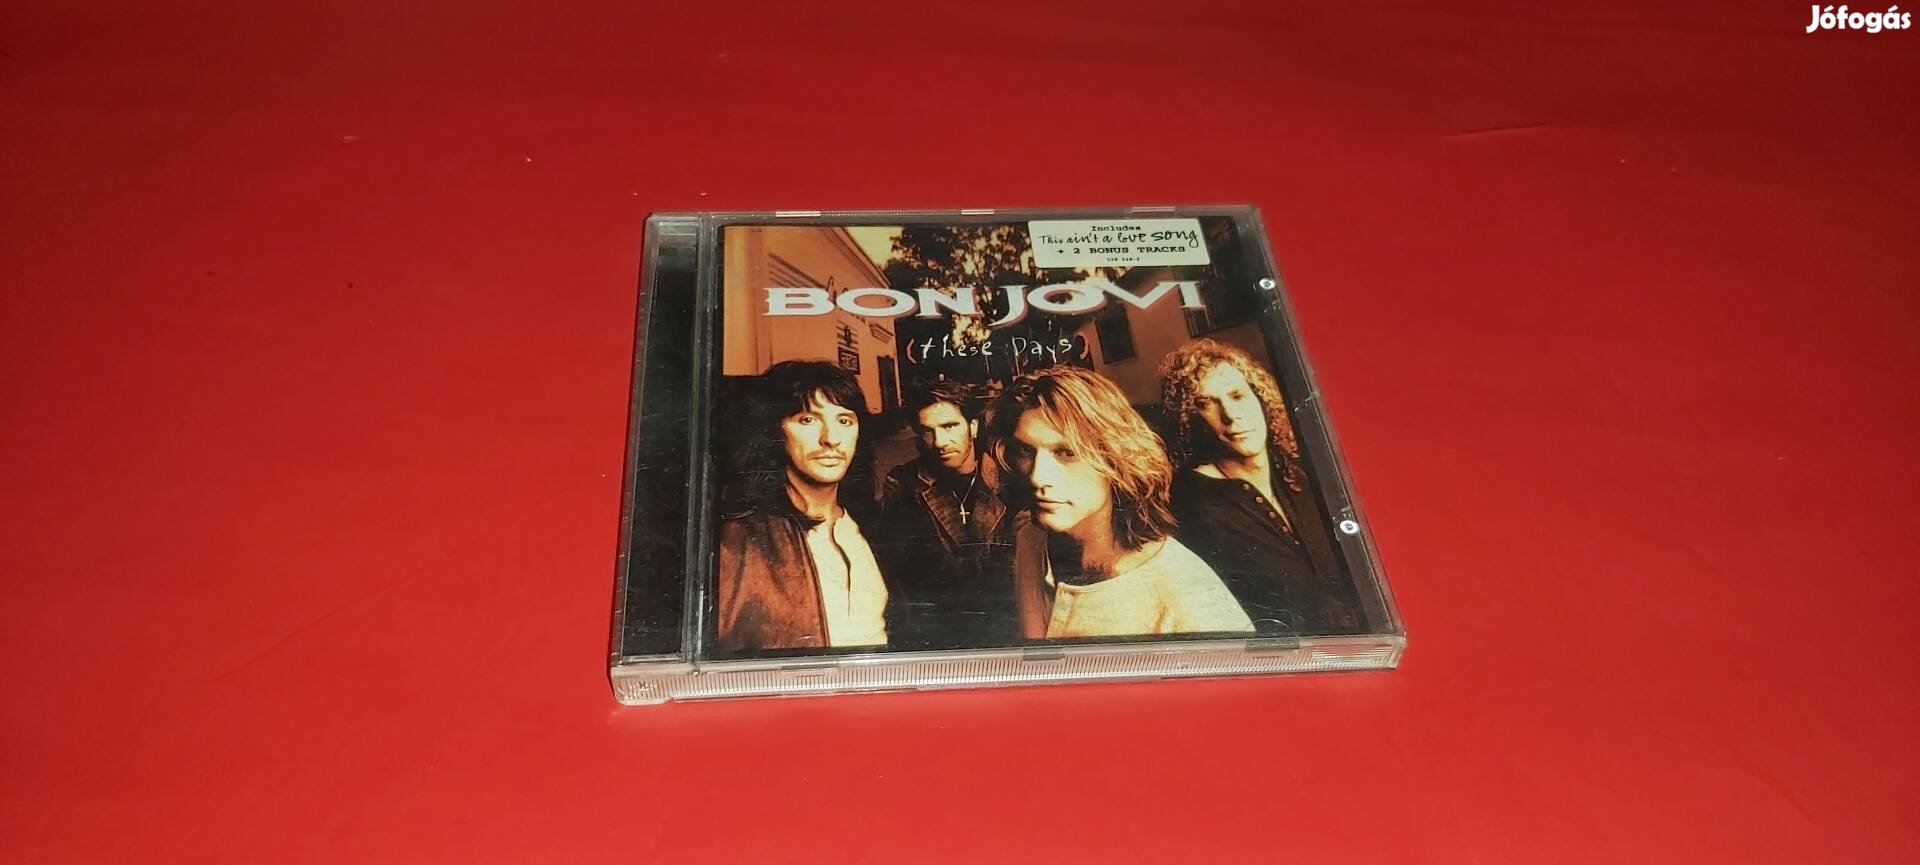 Bon Jovi These days Cd 1995